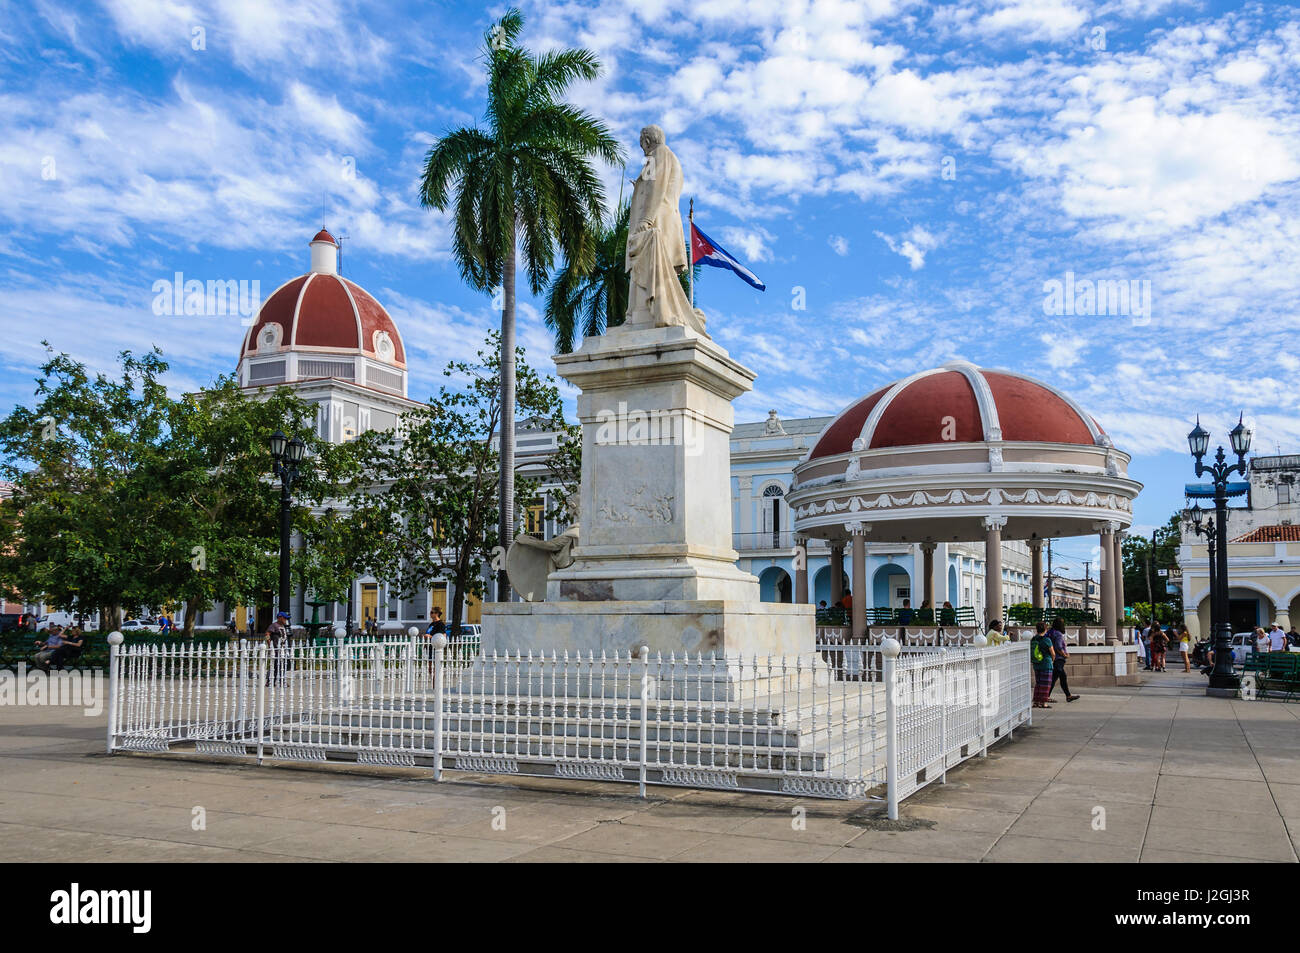 Jose Marti Park, l'UNESCO World Heritage place principale de Cienfuegos, Cuba Banque D'Images